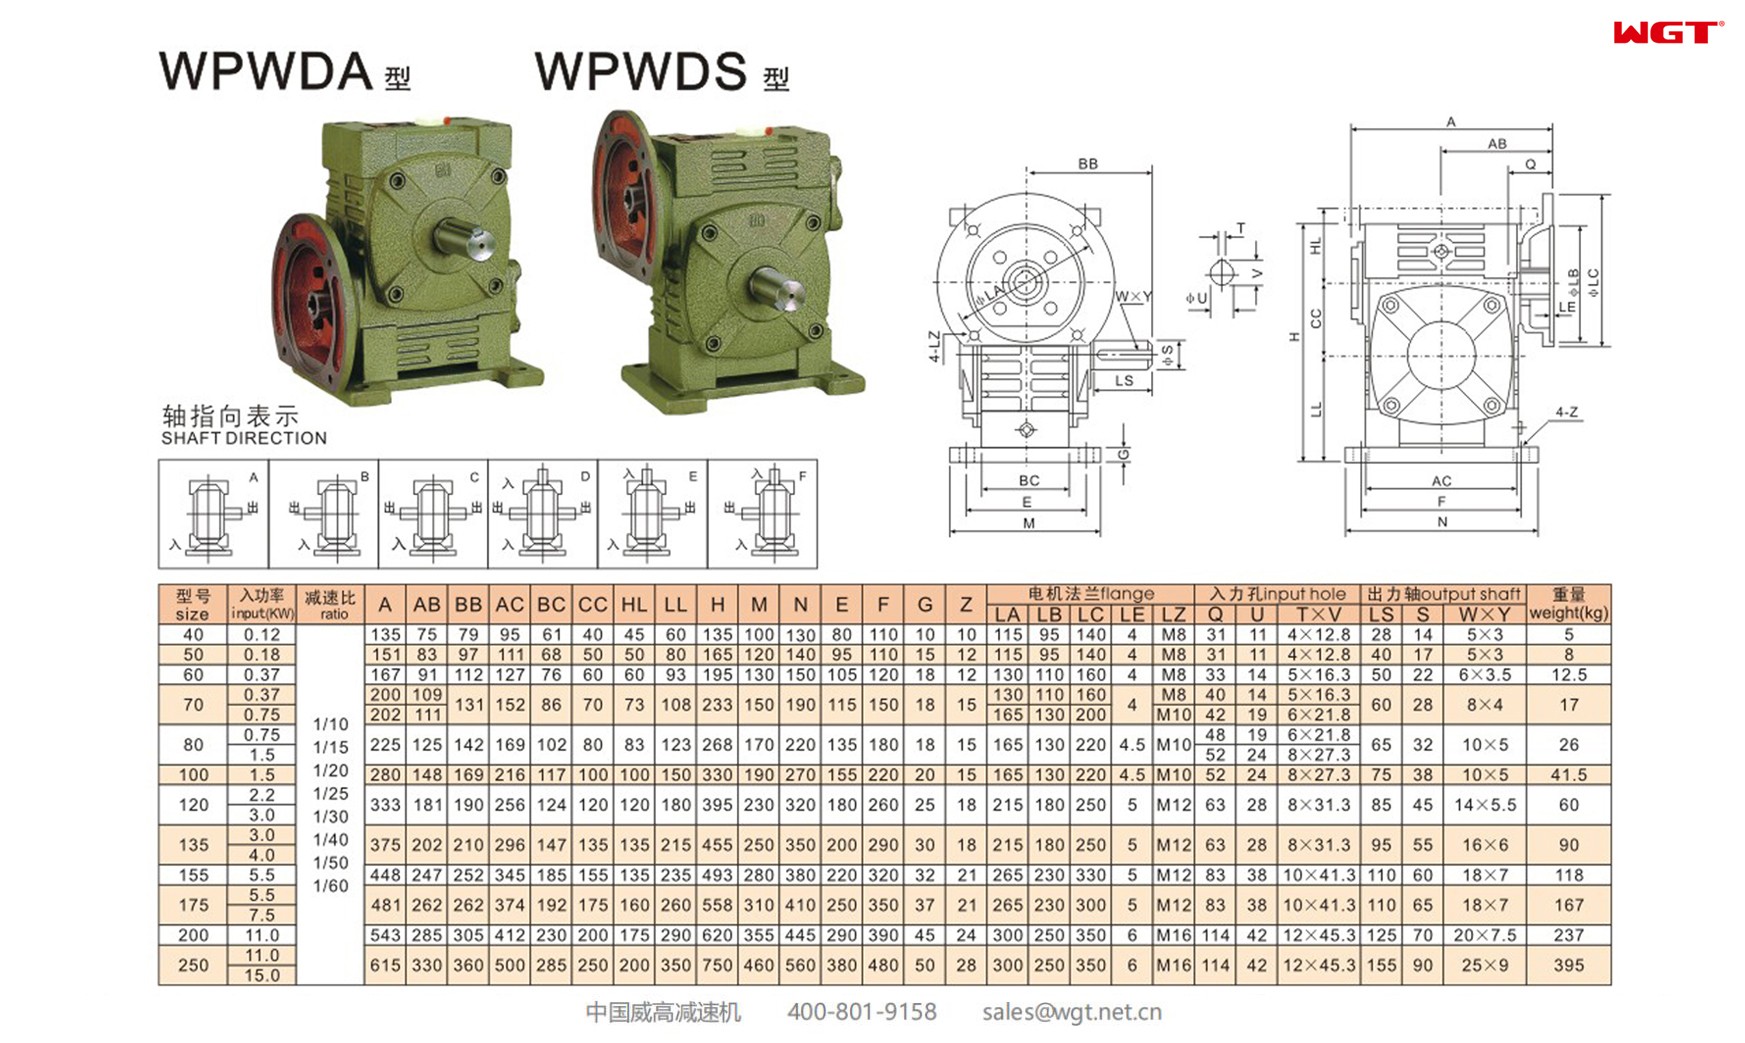 WPWDS155 worm gear reducer universal speed reducer 